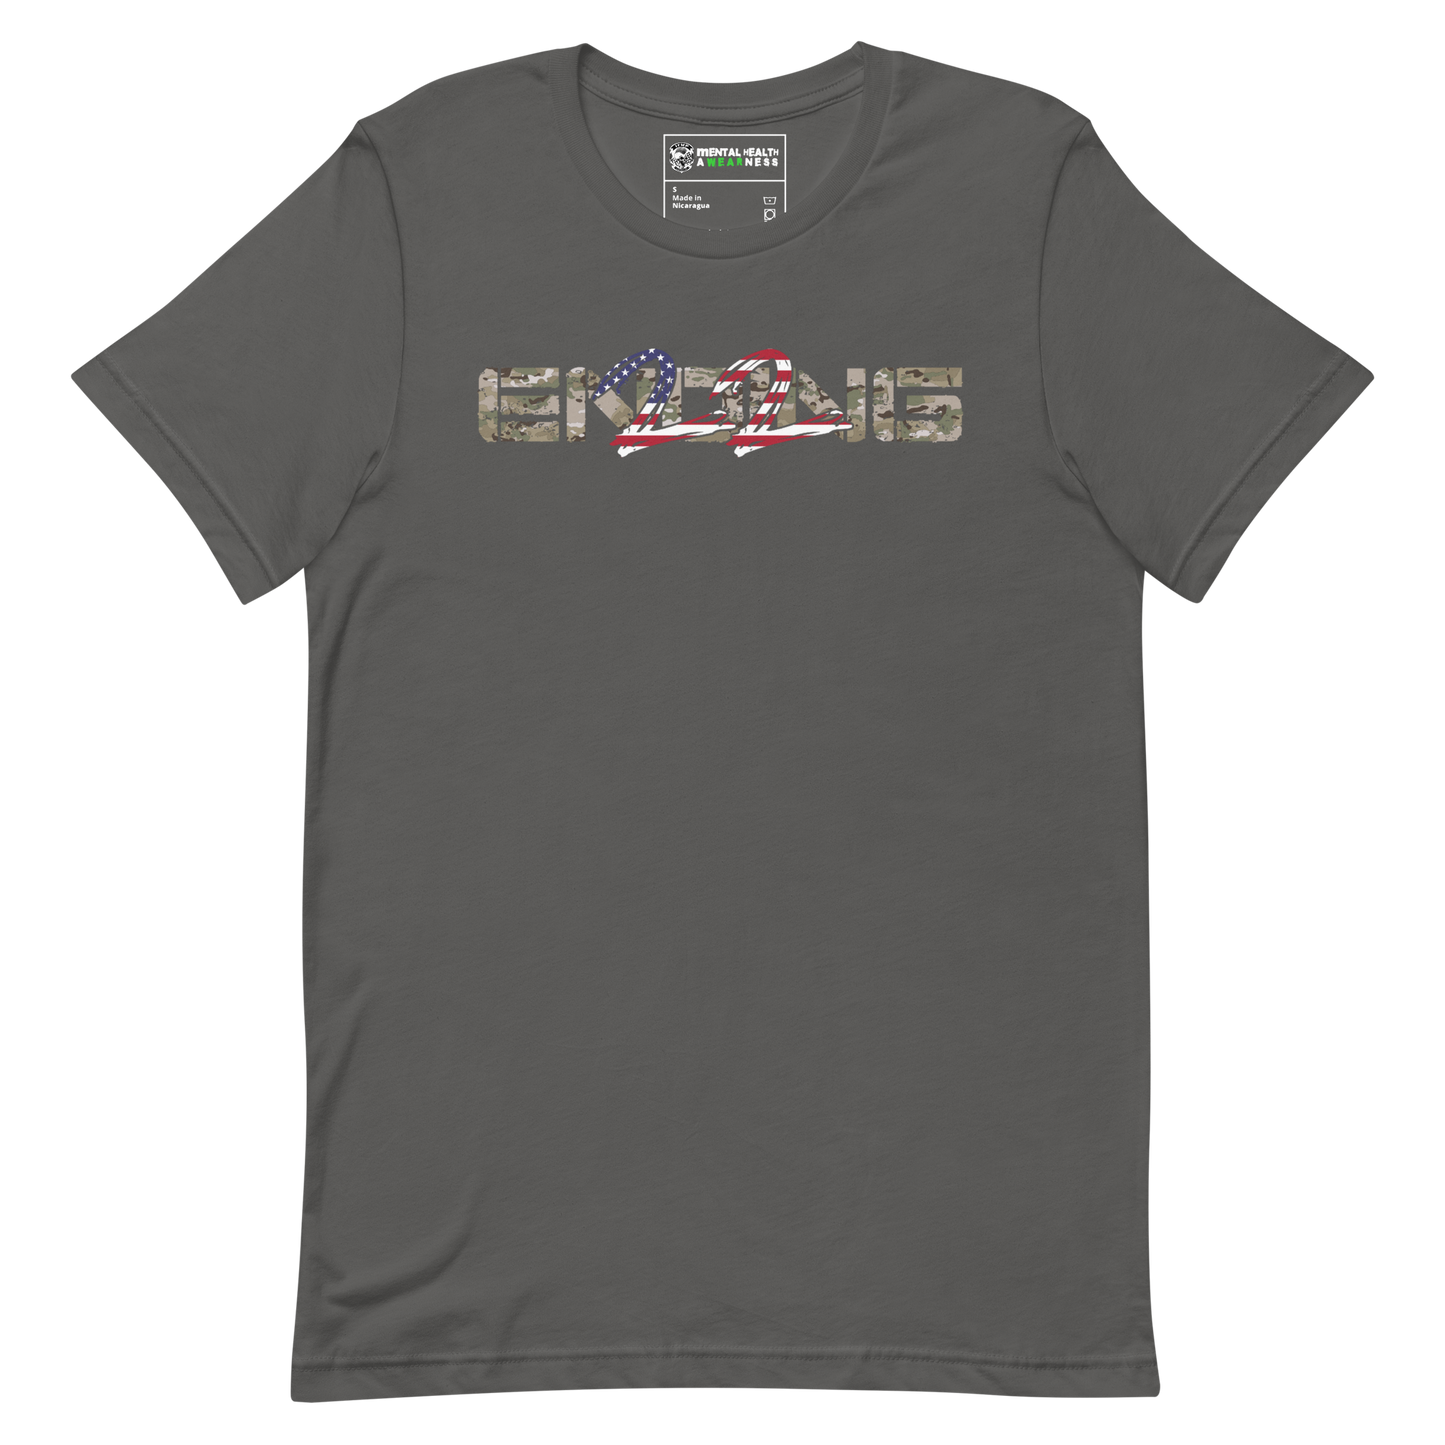 ENDING 22 Army "Grunt" Edition Asphalt T-Shirt Front